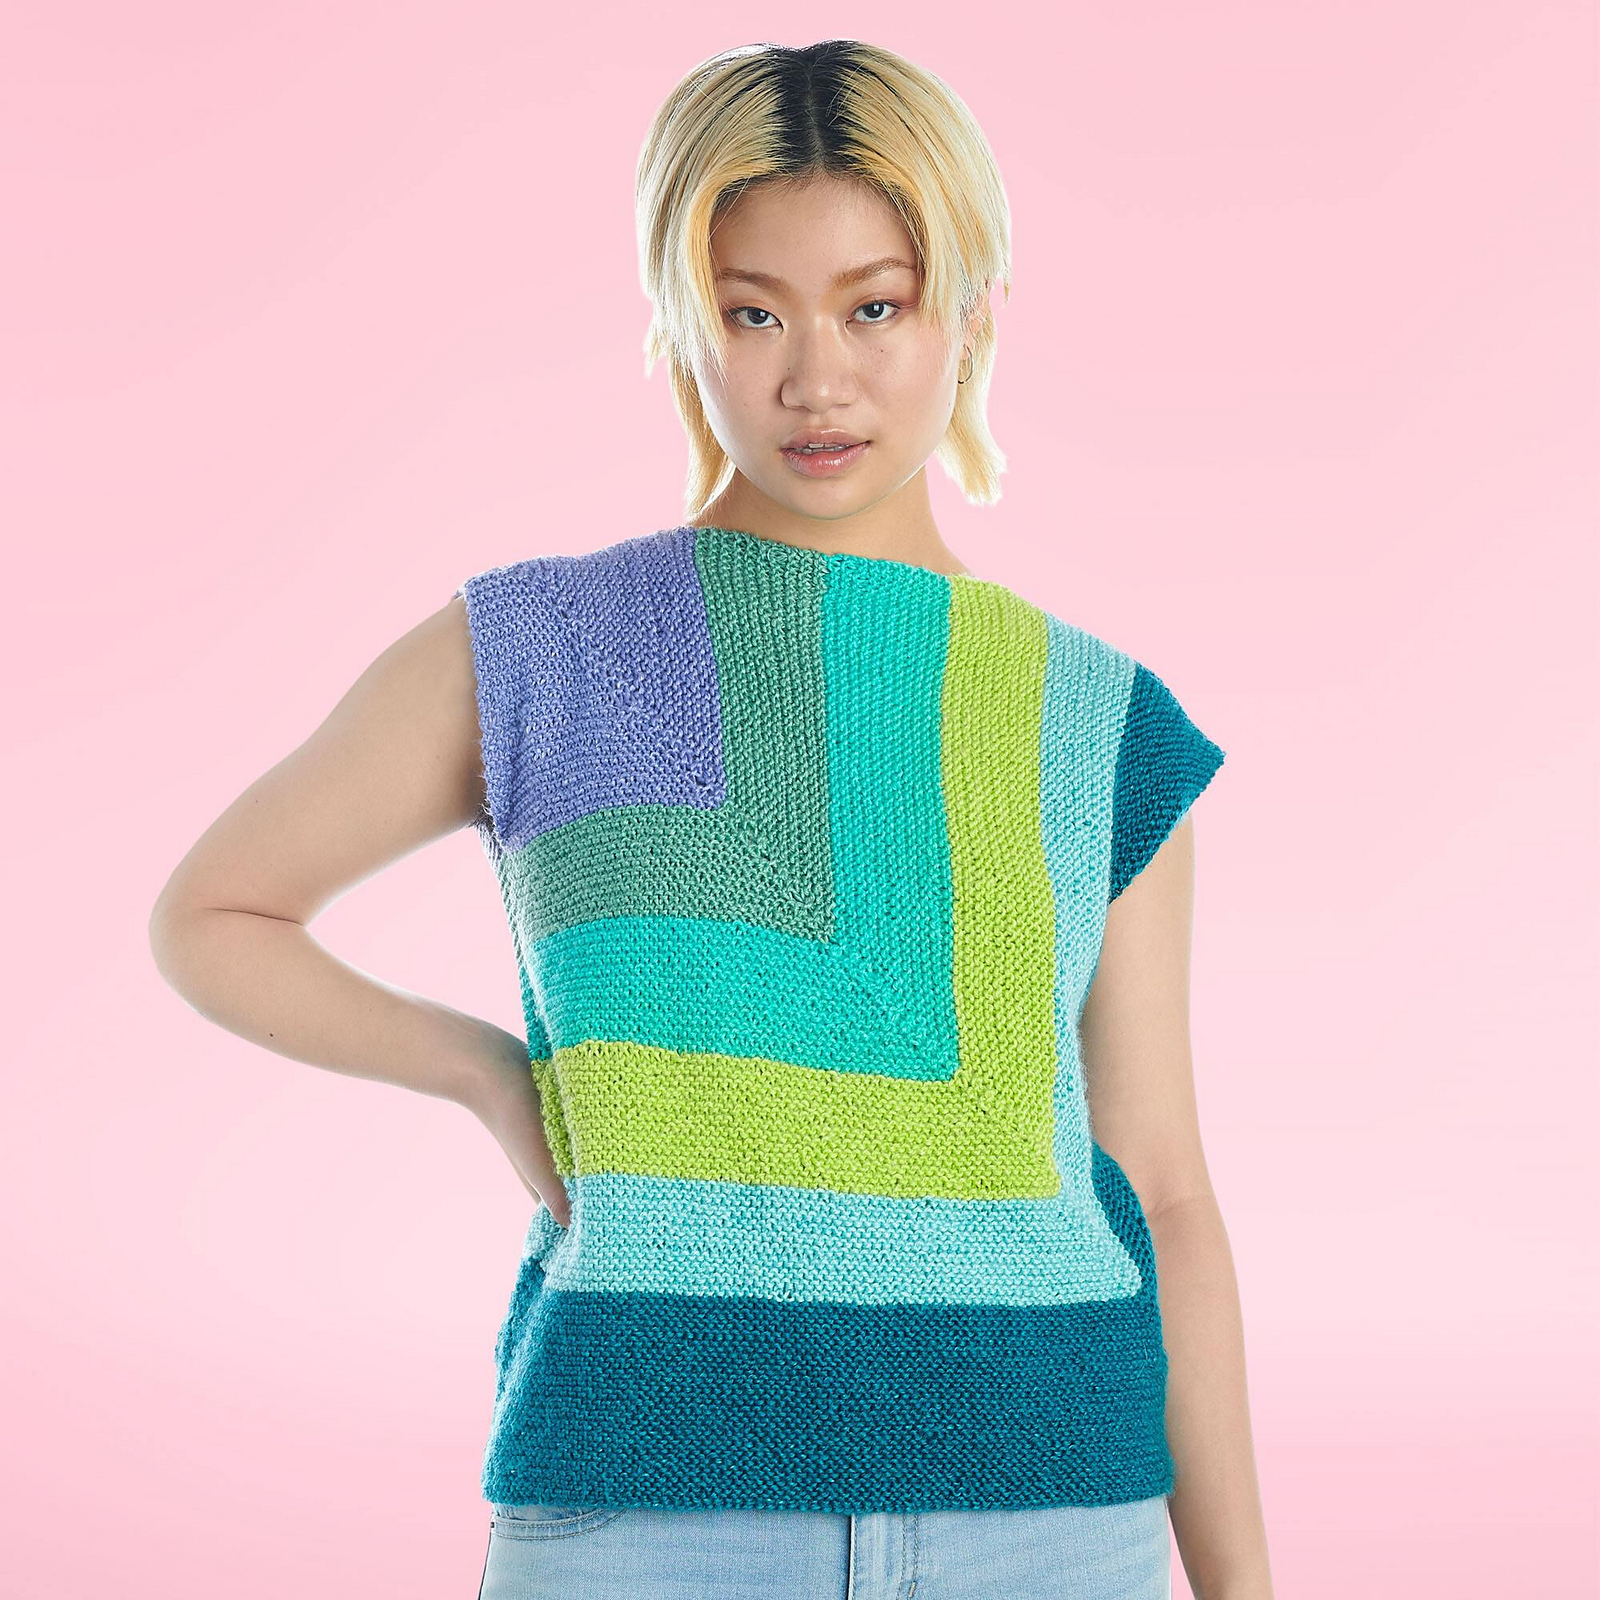 Free Pattern Alert: Knit a Fun Mitered Top Designed By Yarnspirations Design Studio!